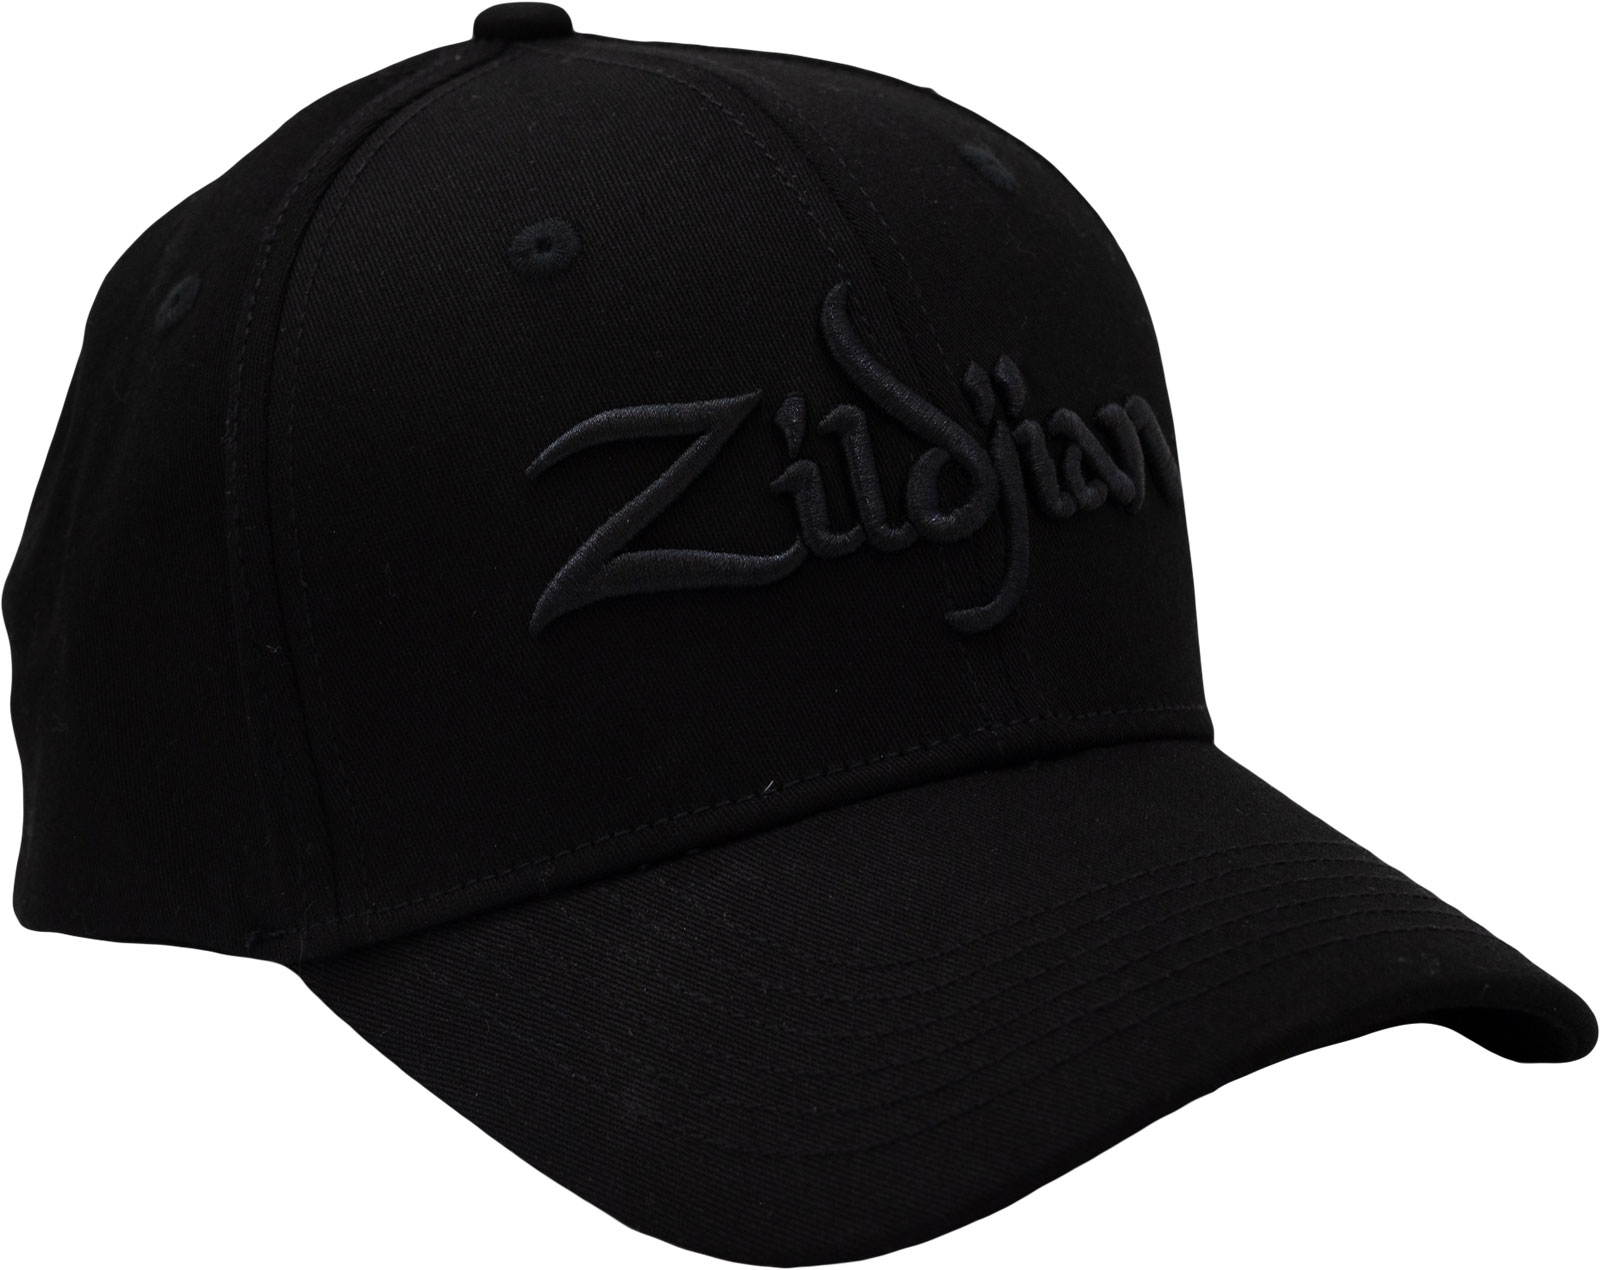 ZILDJIAN BLACK CAP 